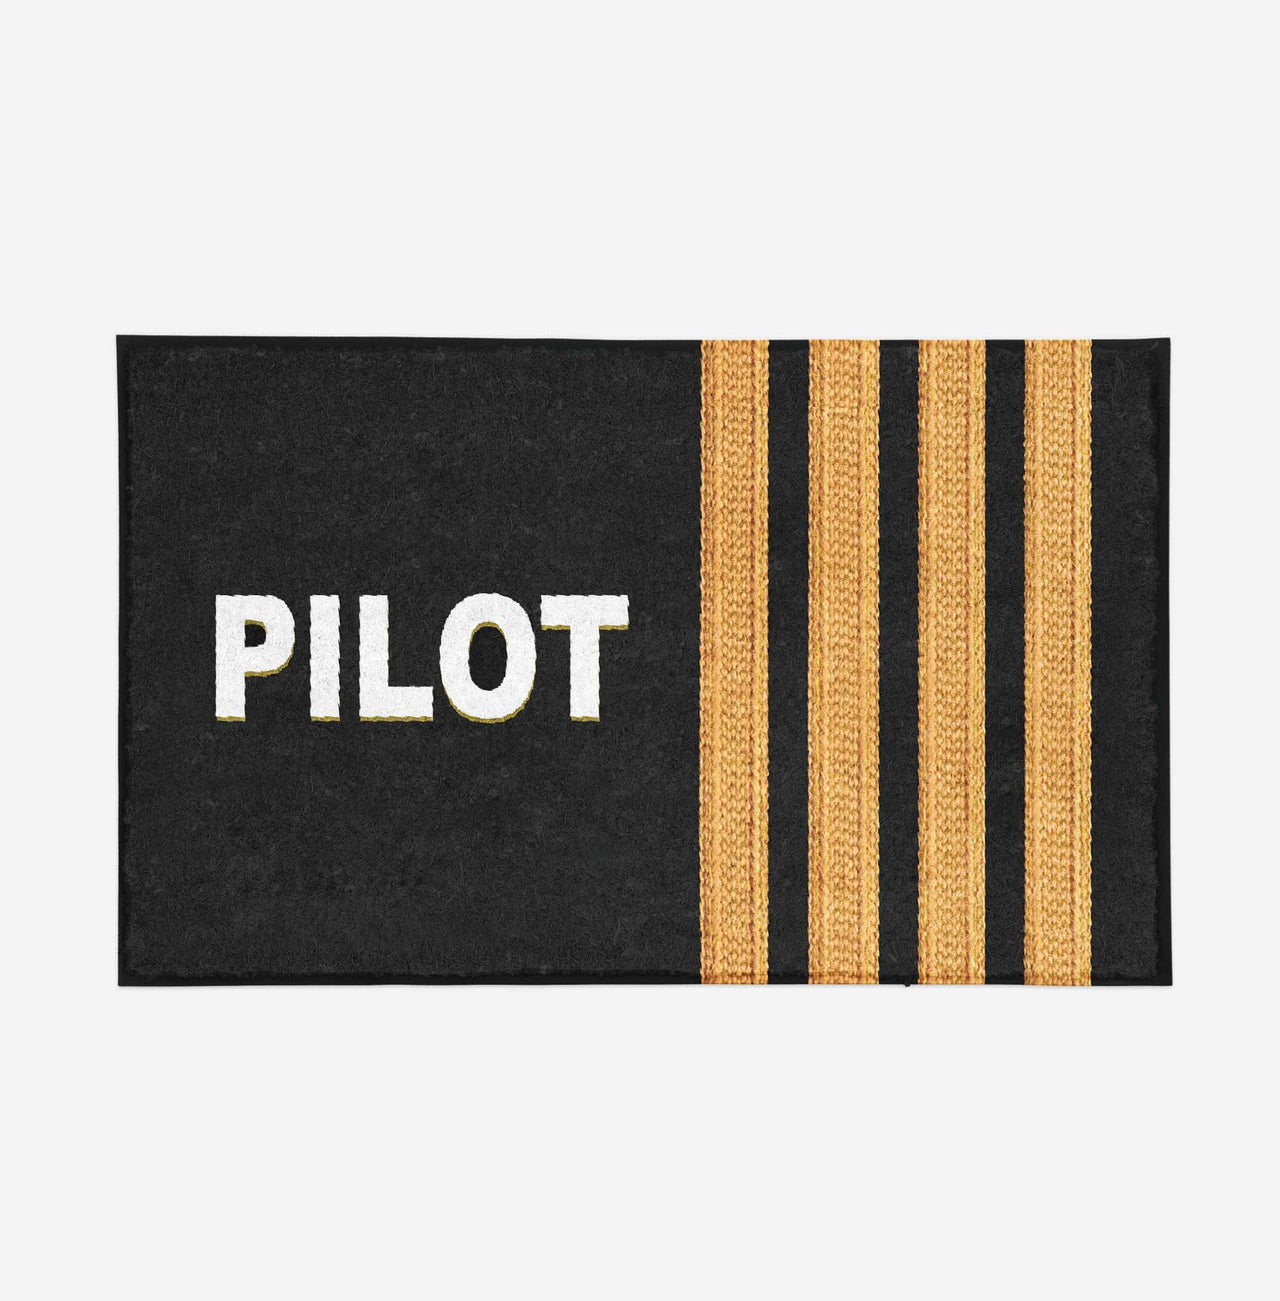 Pilot Text & Epaulettes (4 Lines) Designed Door Mats